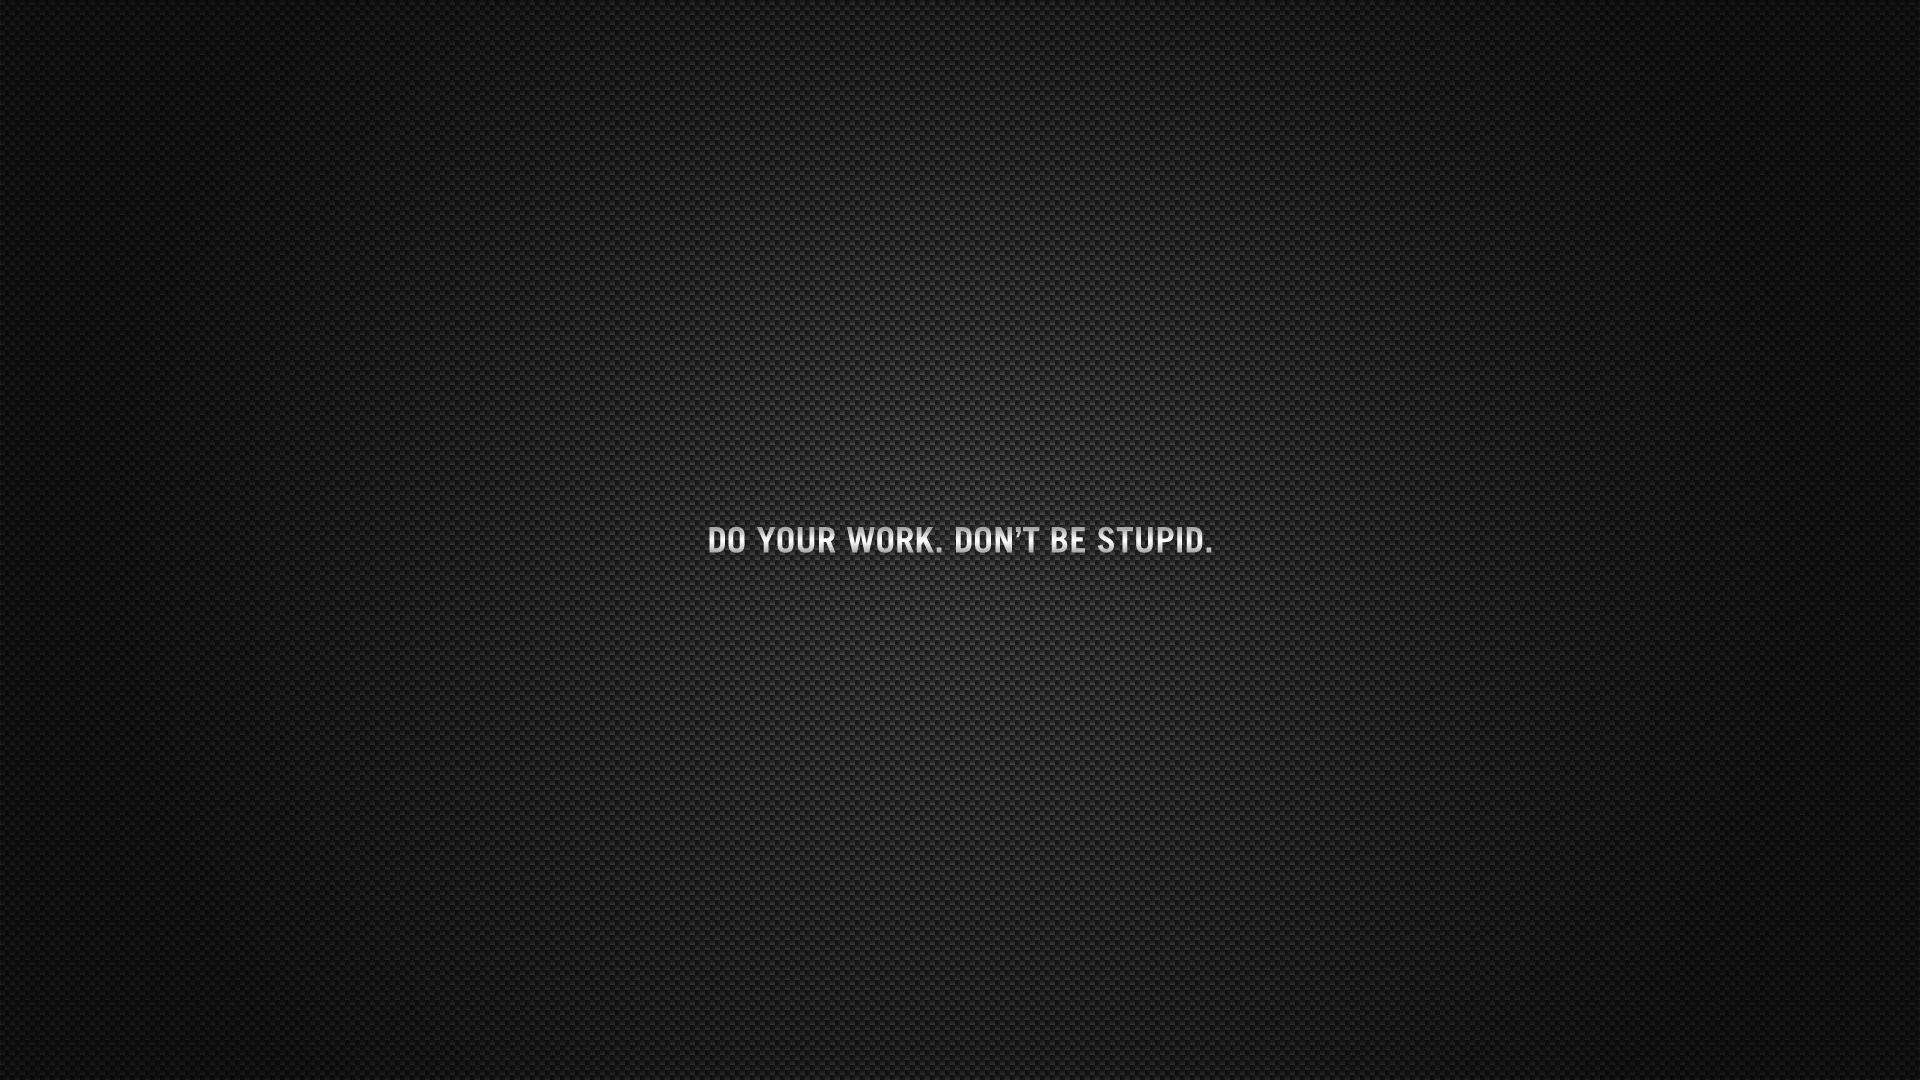 Cute Work Quotes Desktop Wallpapers - Top Free Cute Work Quotes Desktop ...